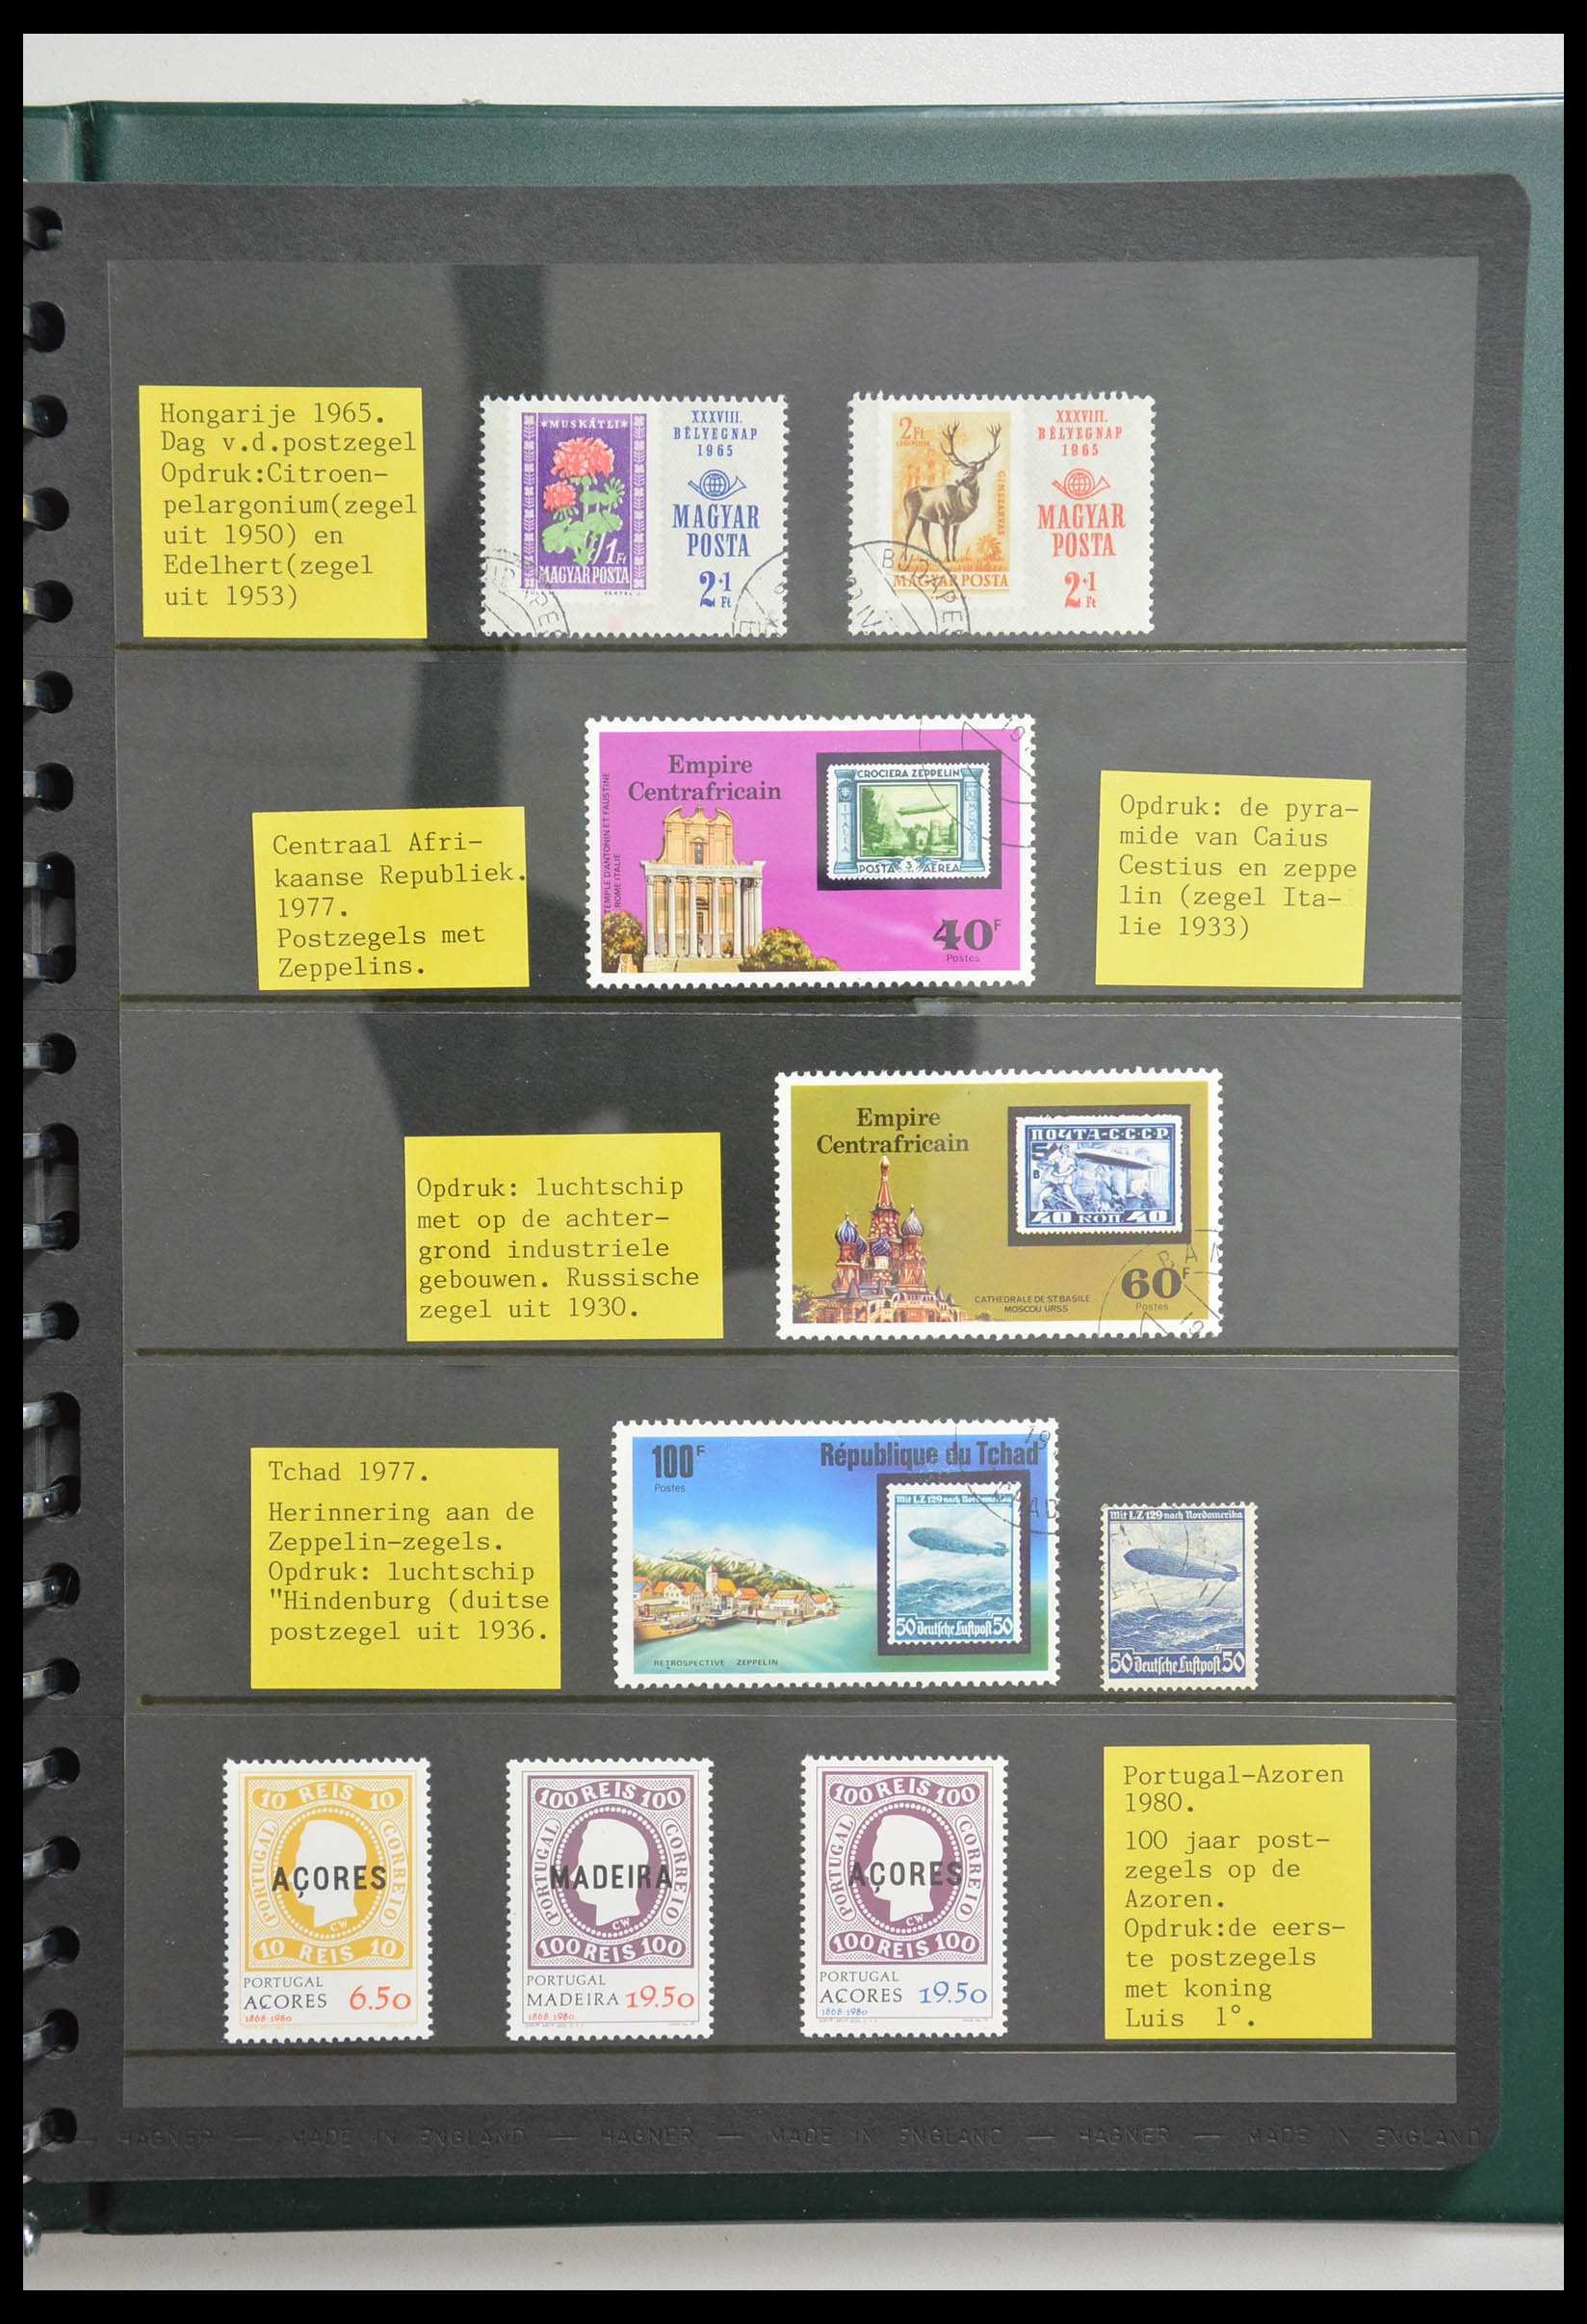 28337 115 - 28337 Postzegel op postzegel 1840-2001.